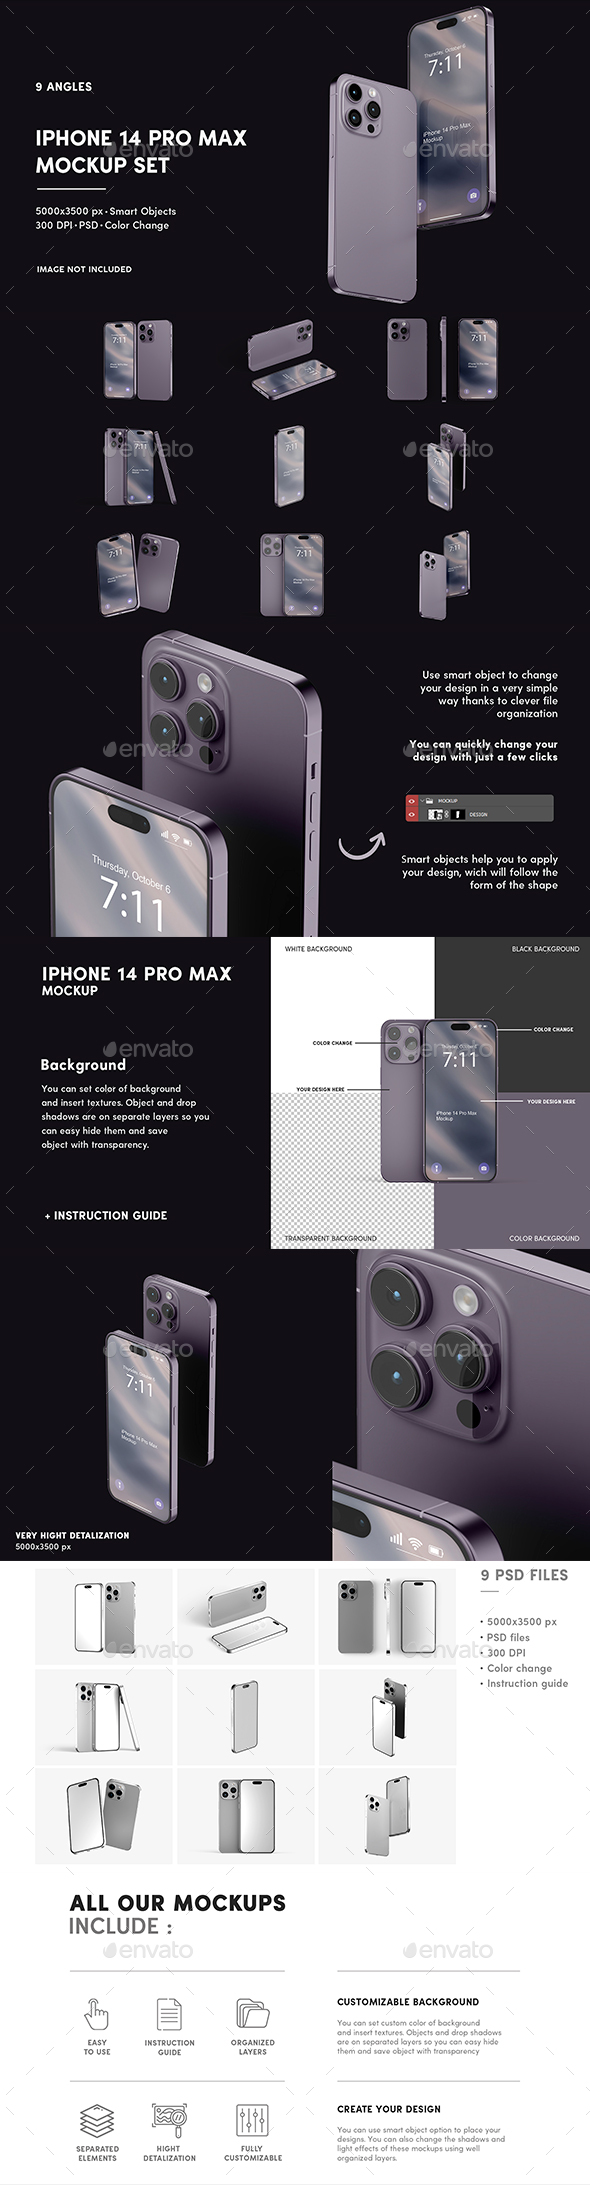 Iphone 14 Pro Max Mockup Set